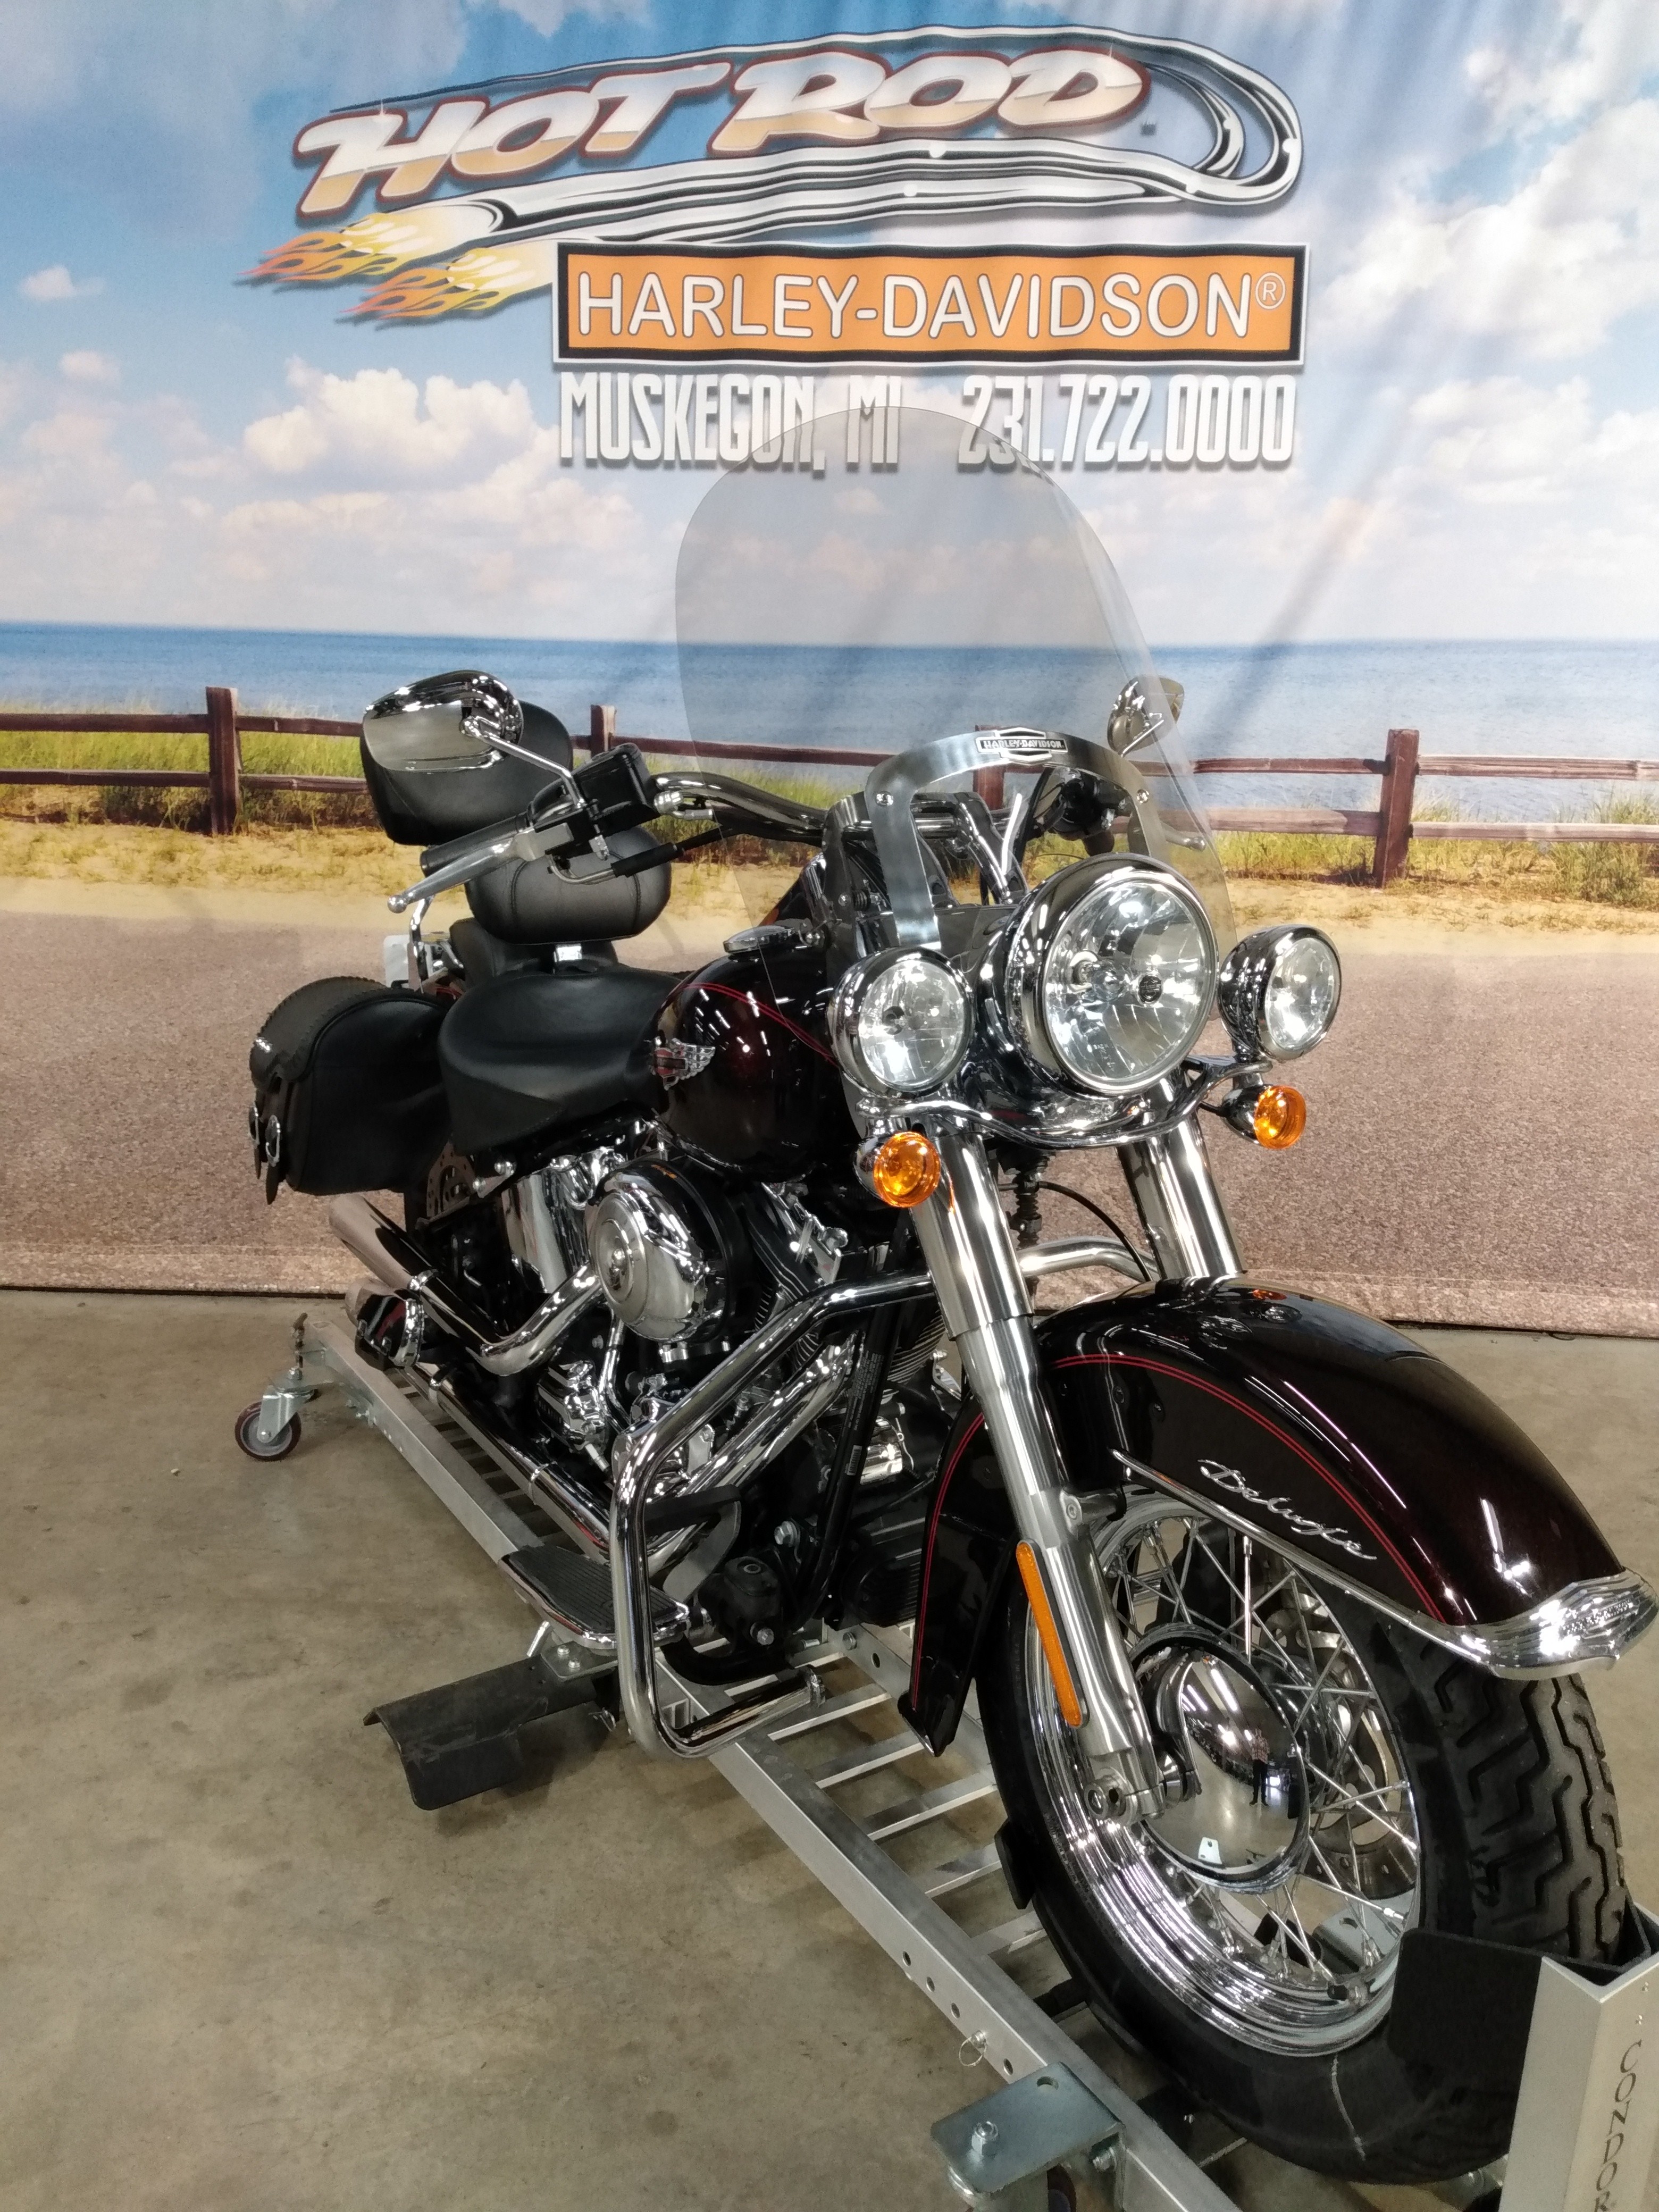 2011 Harley-Davidson Softail Deluxe at Hot Rod Harley-Davidson